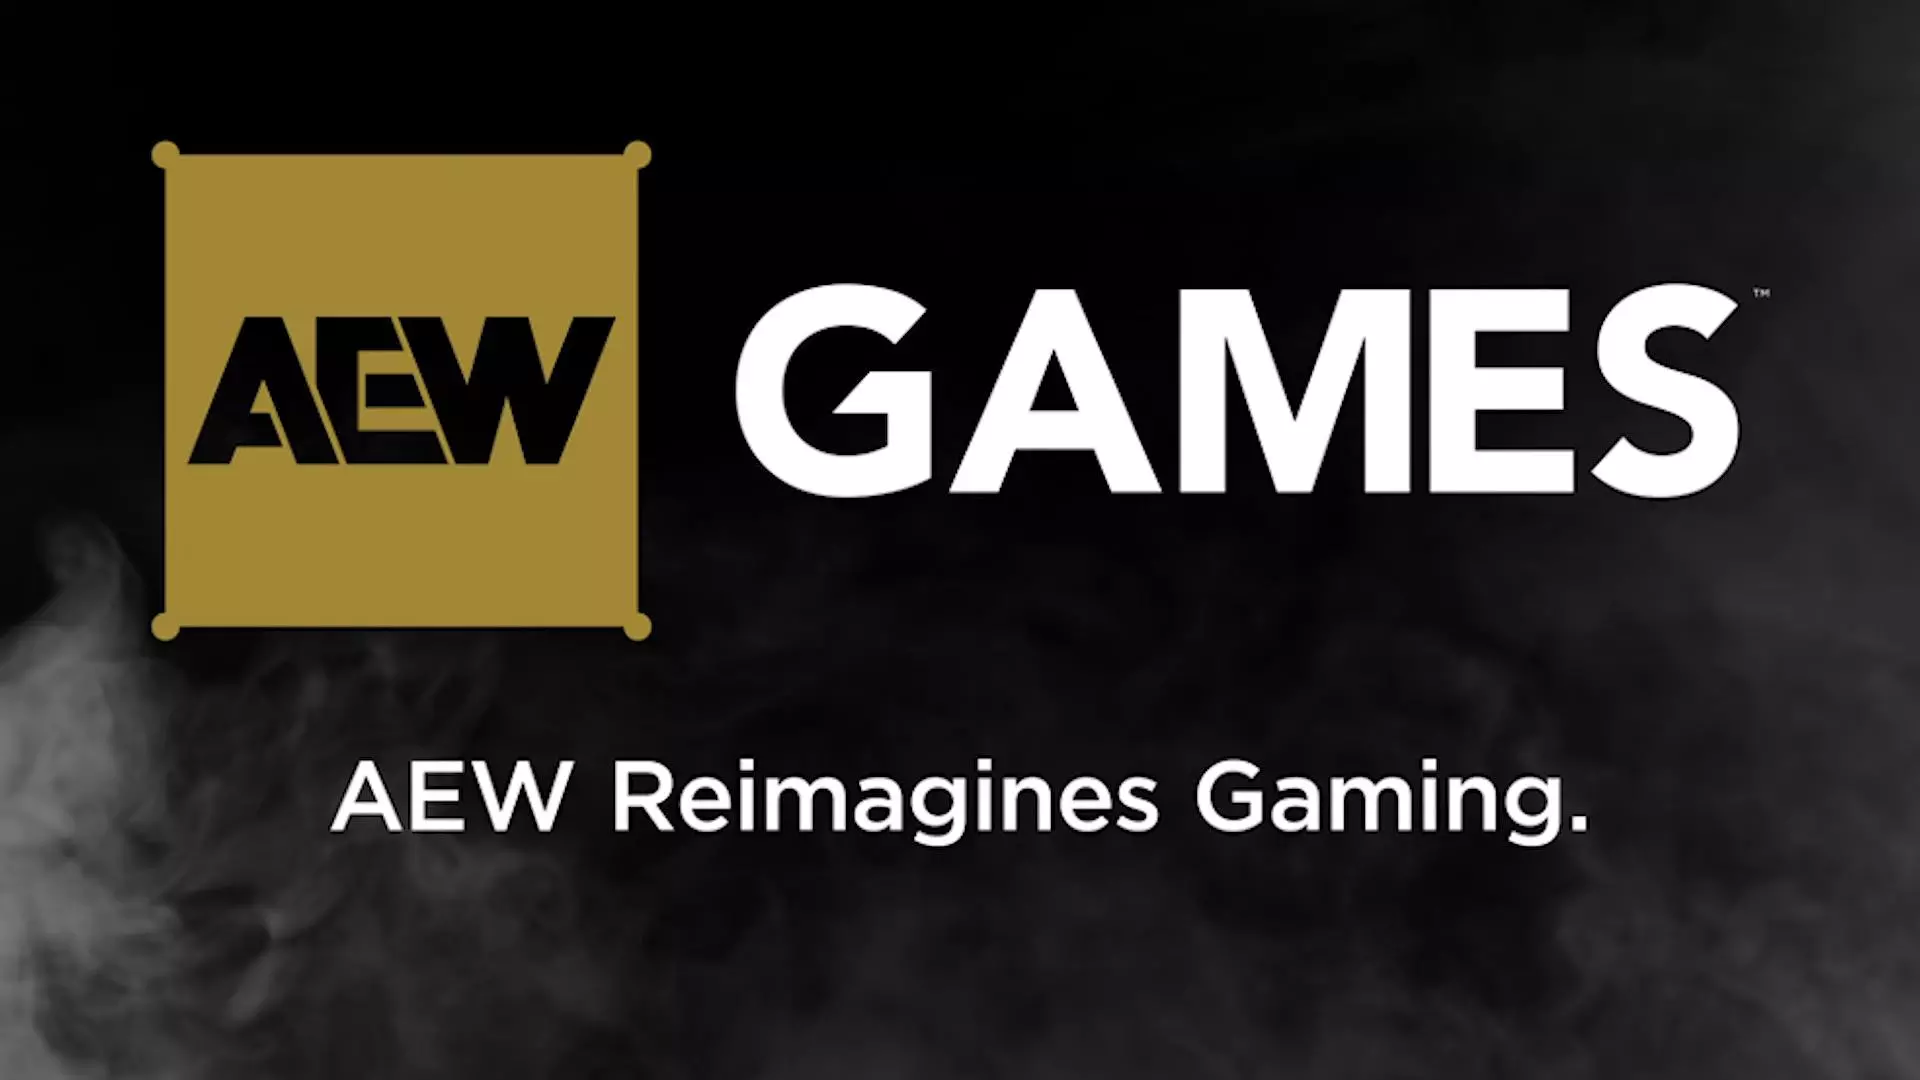 aew games announcement